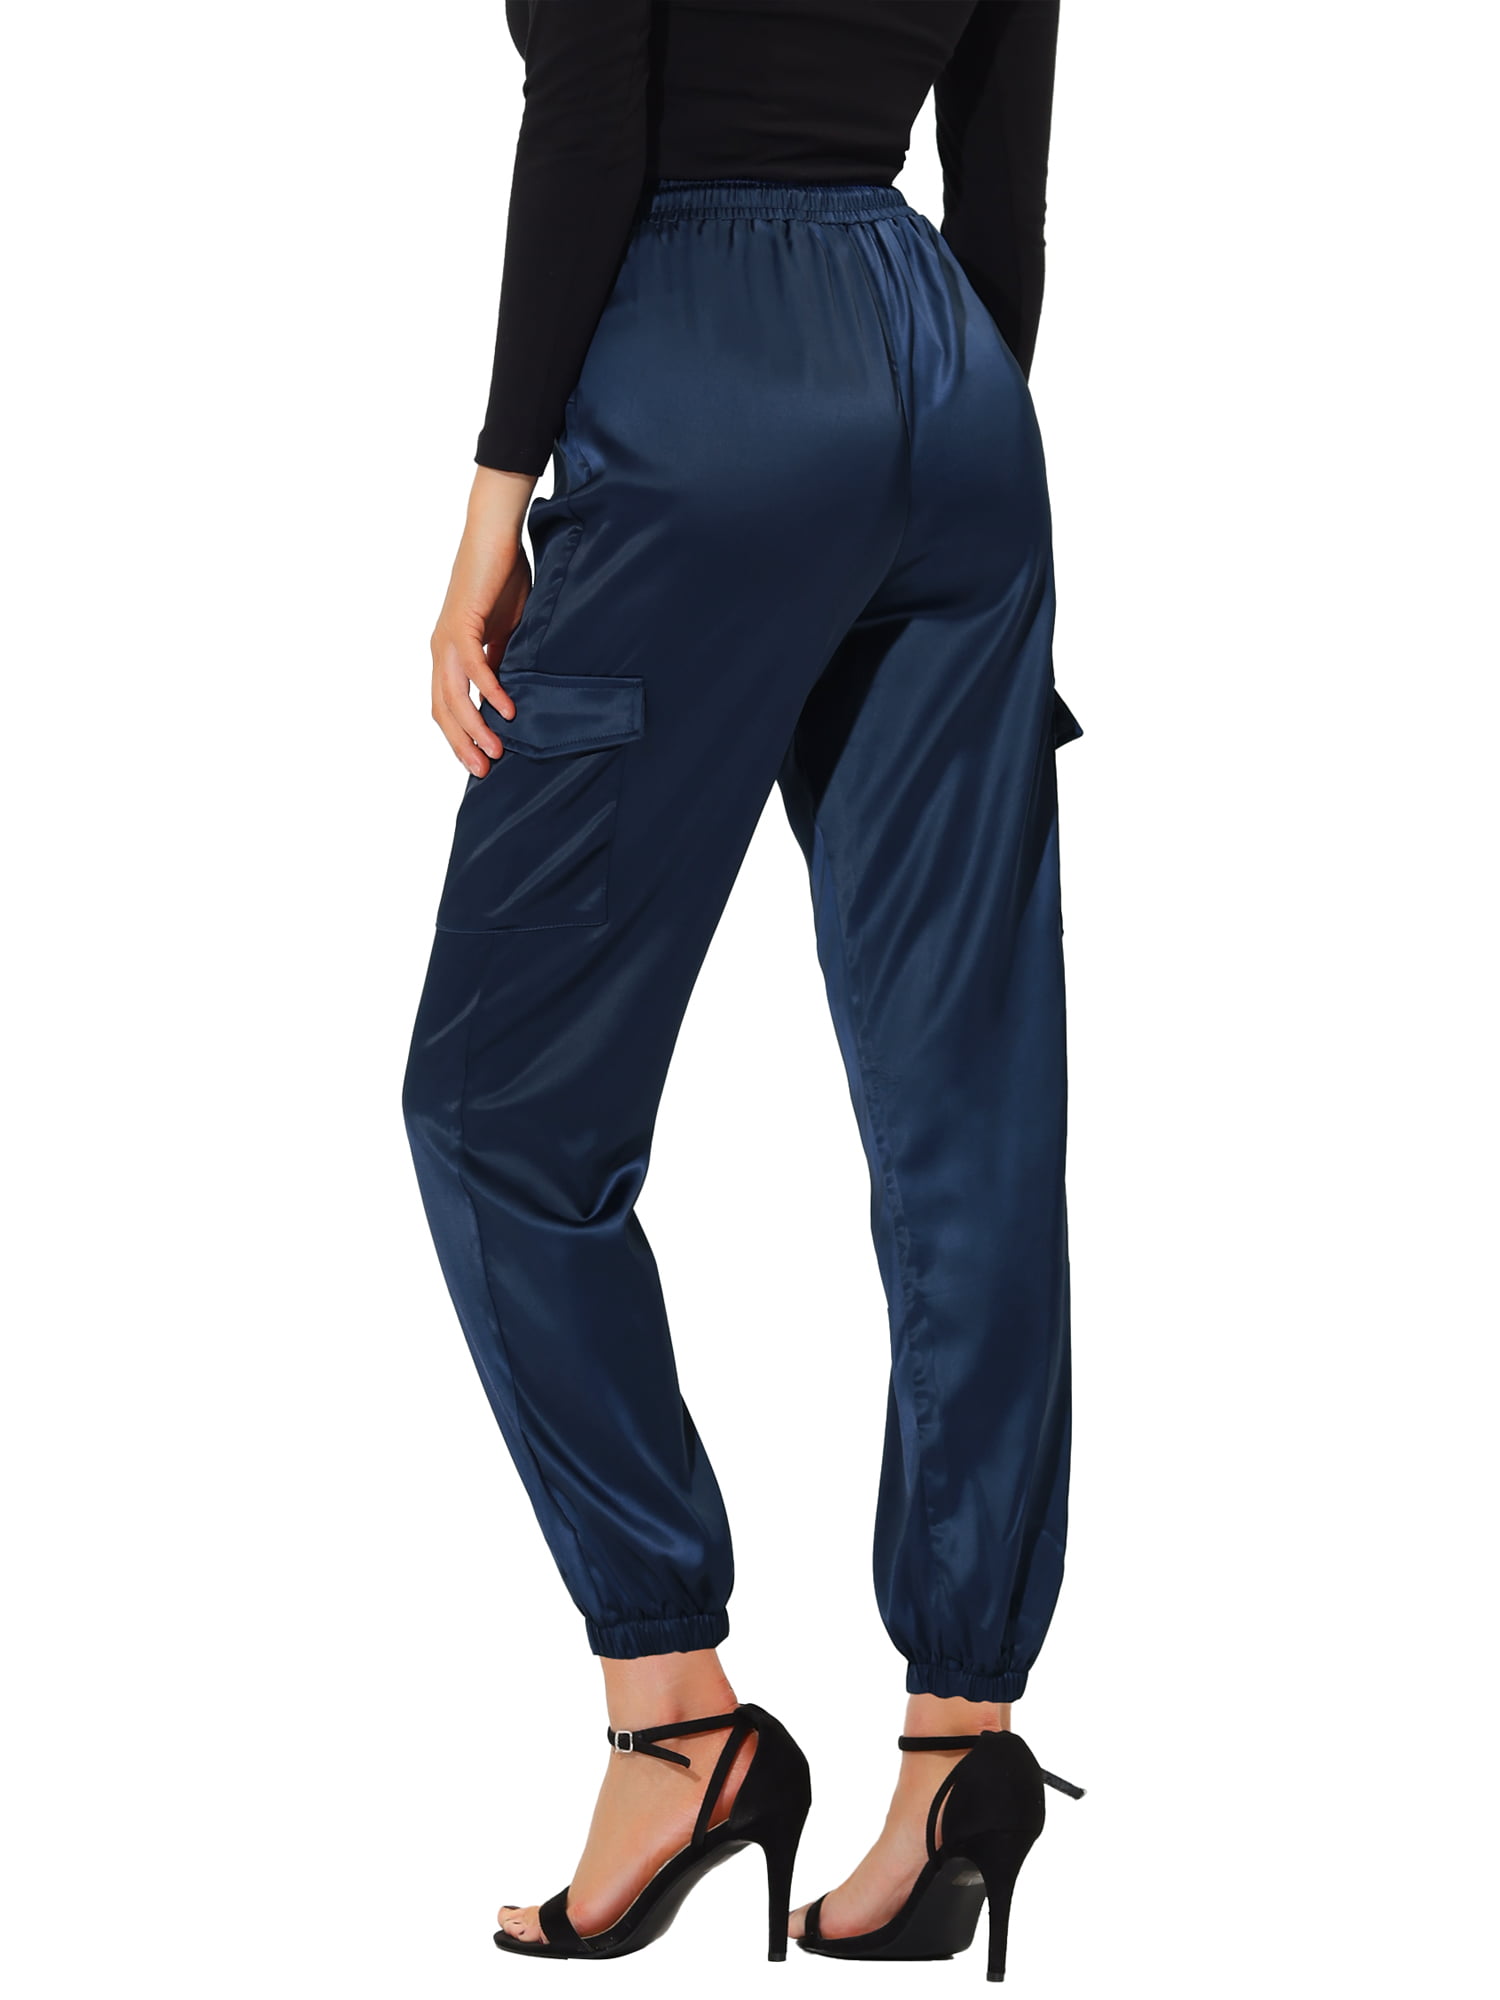 CitronSilk Women's Fitted Drawstring/Elastic Cargo Pants